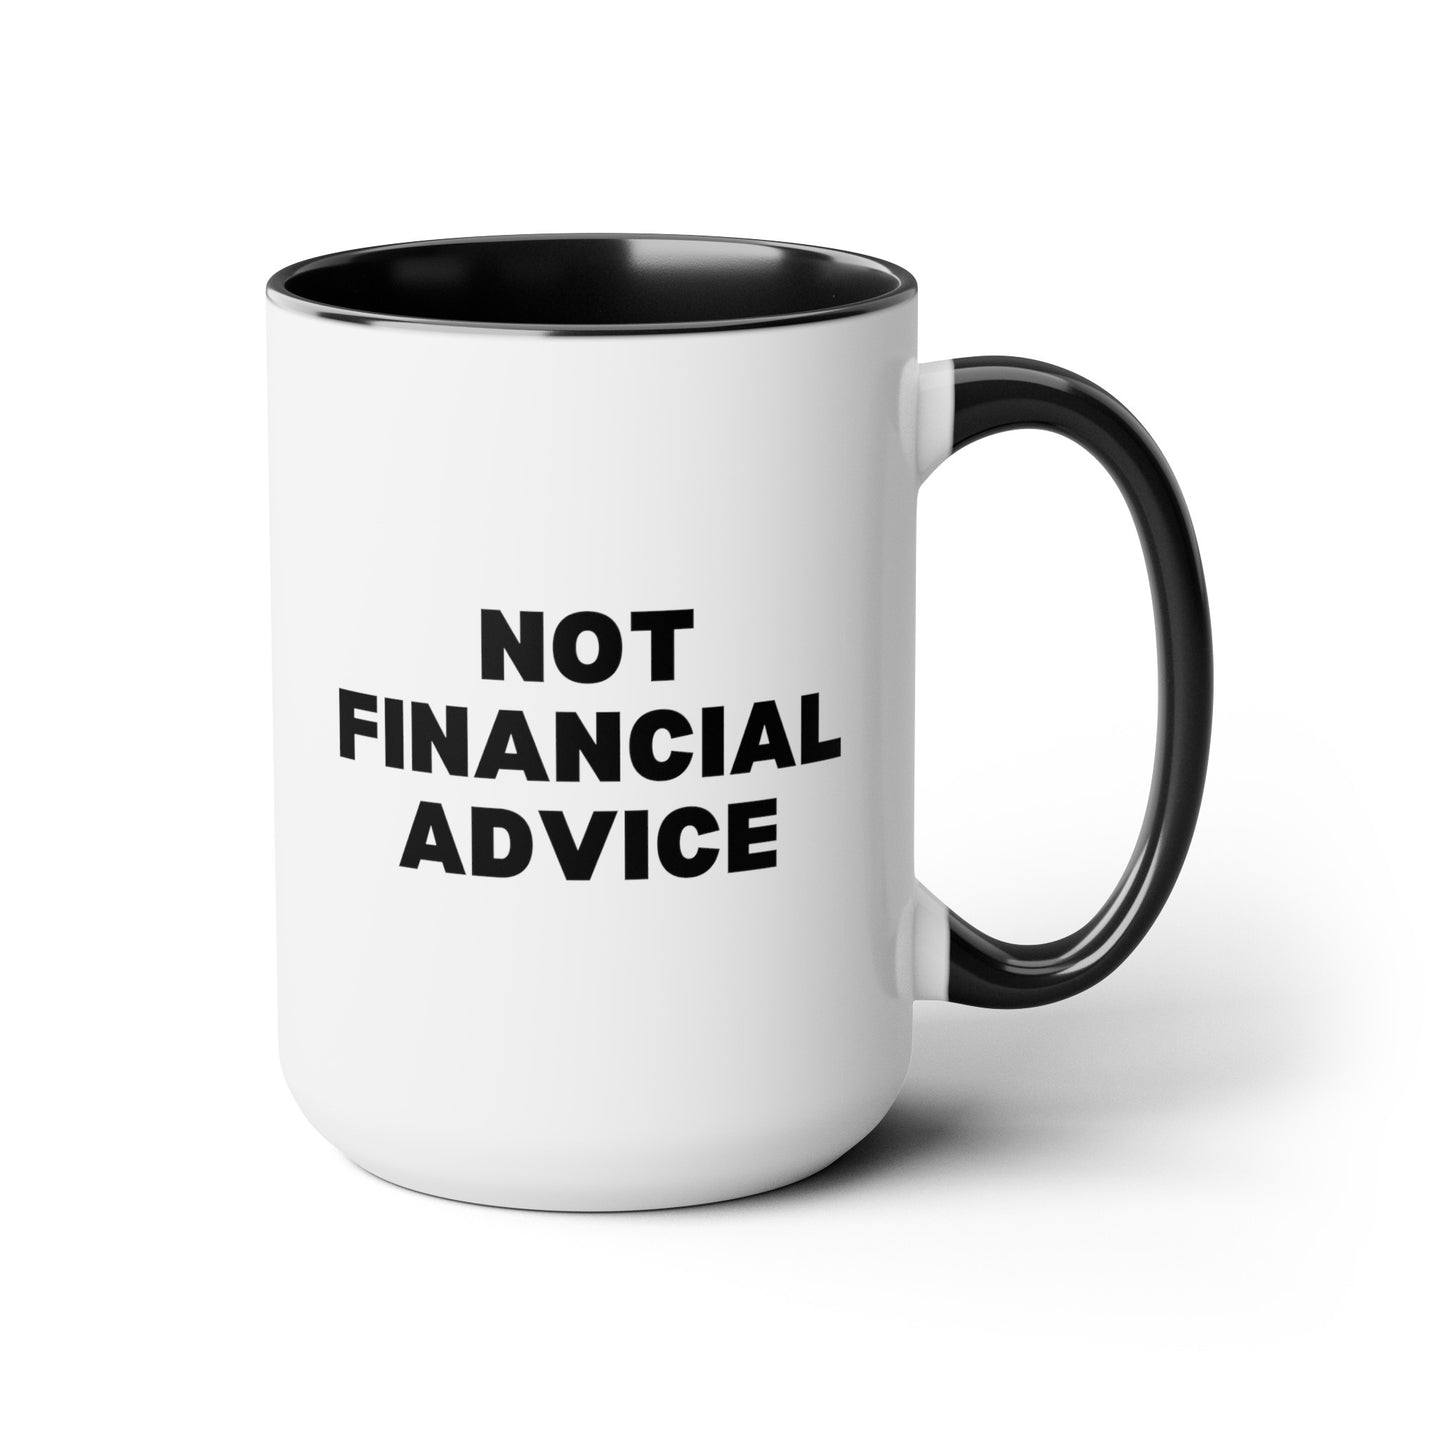 Not Financial Advice 15oz white with black accent funny large coffee mug gift for finance bro advisor specialist joke waveywares wavey wares wavywares wavy wares